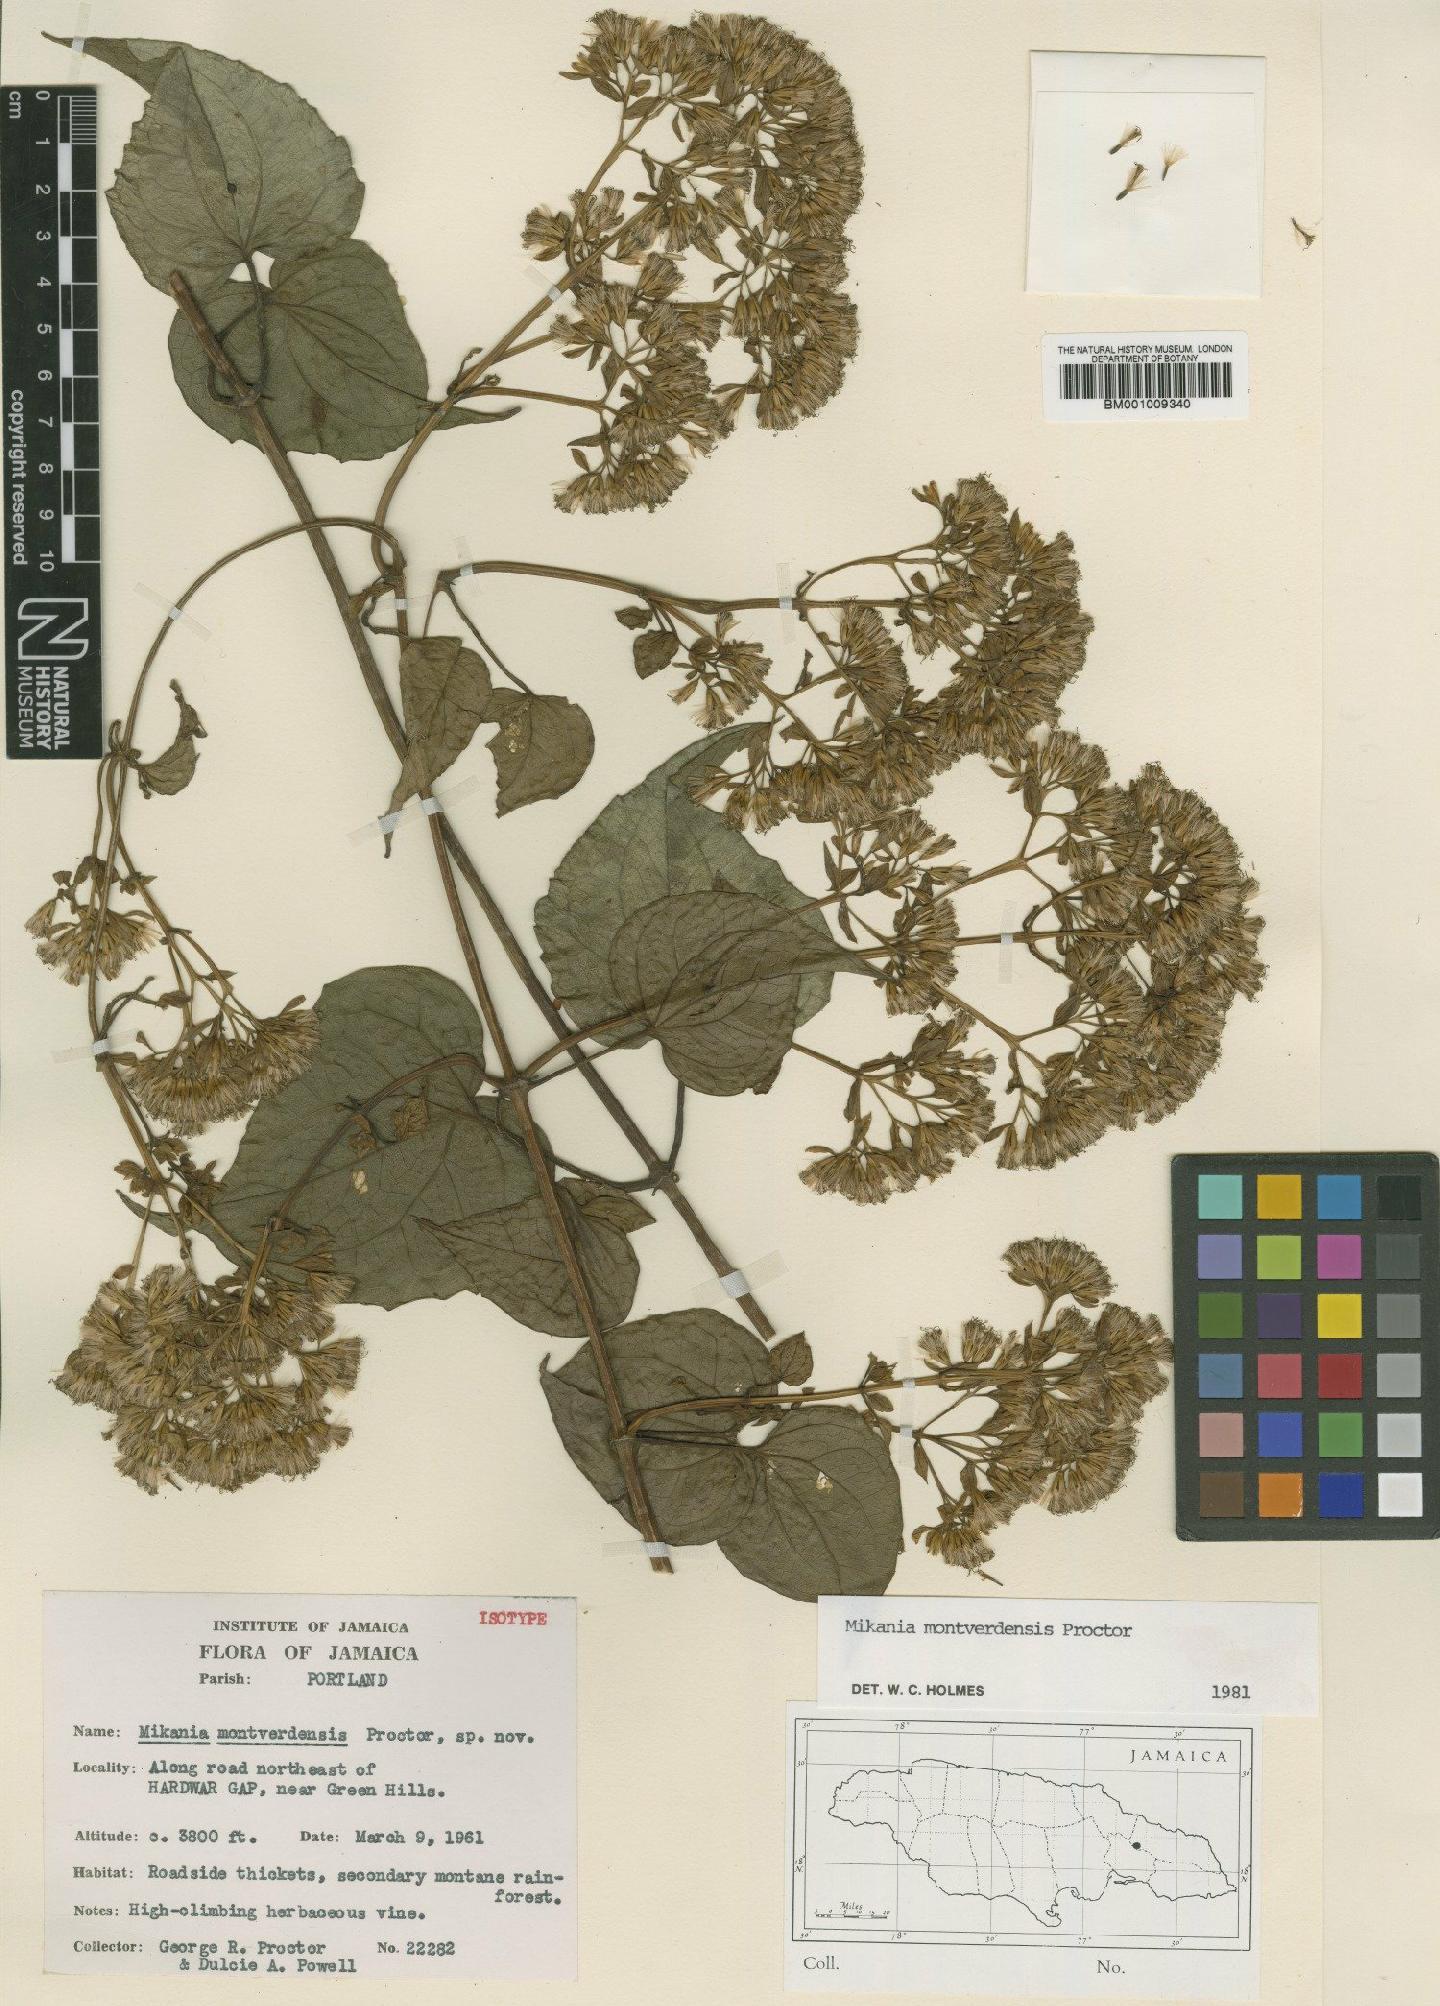 To NHMUK collection (Mikania montverdensis Proctor; Isotype; NHMUK:ecatalogue:572741)